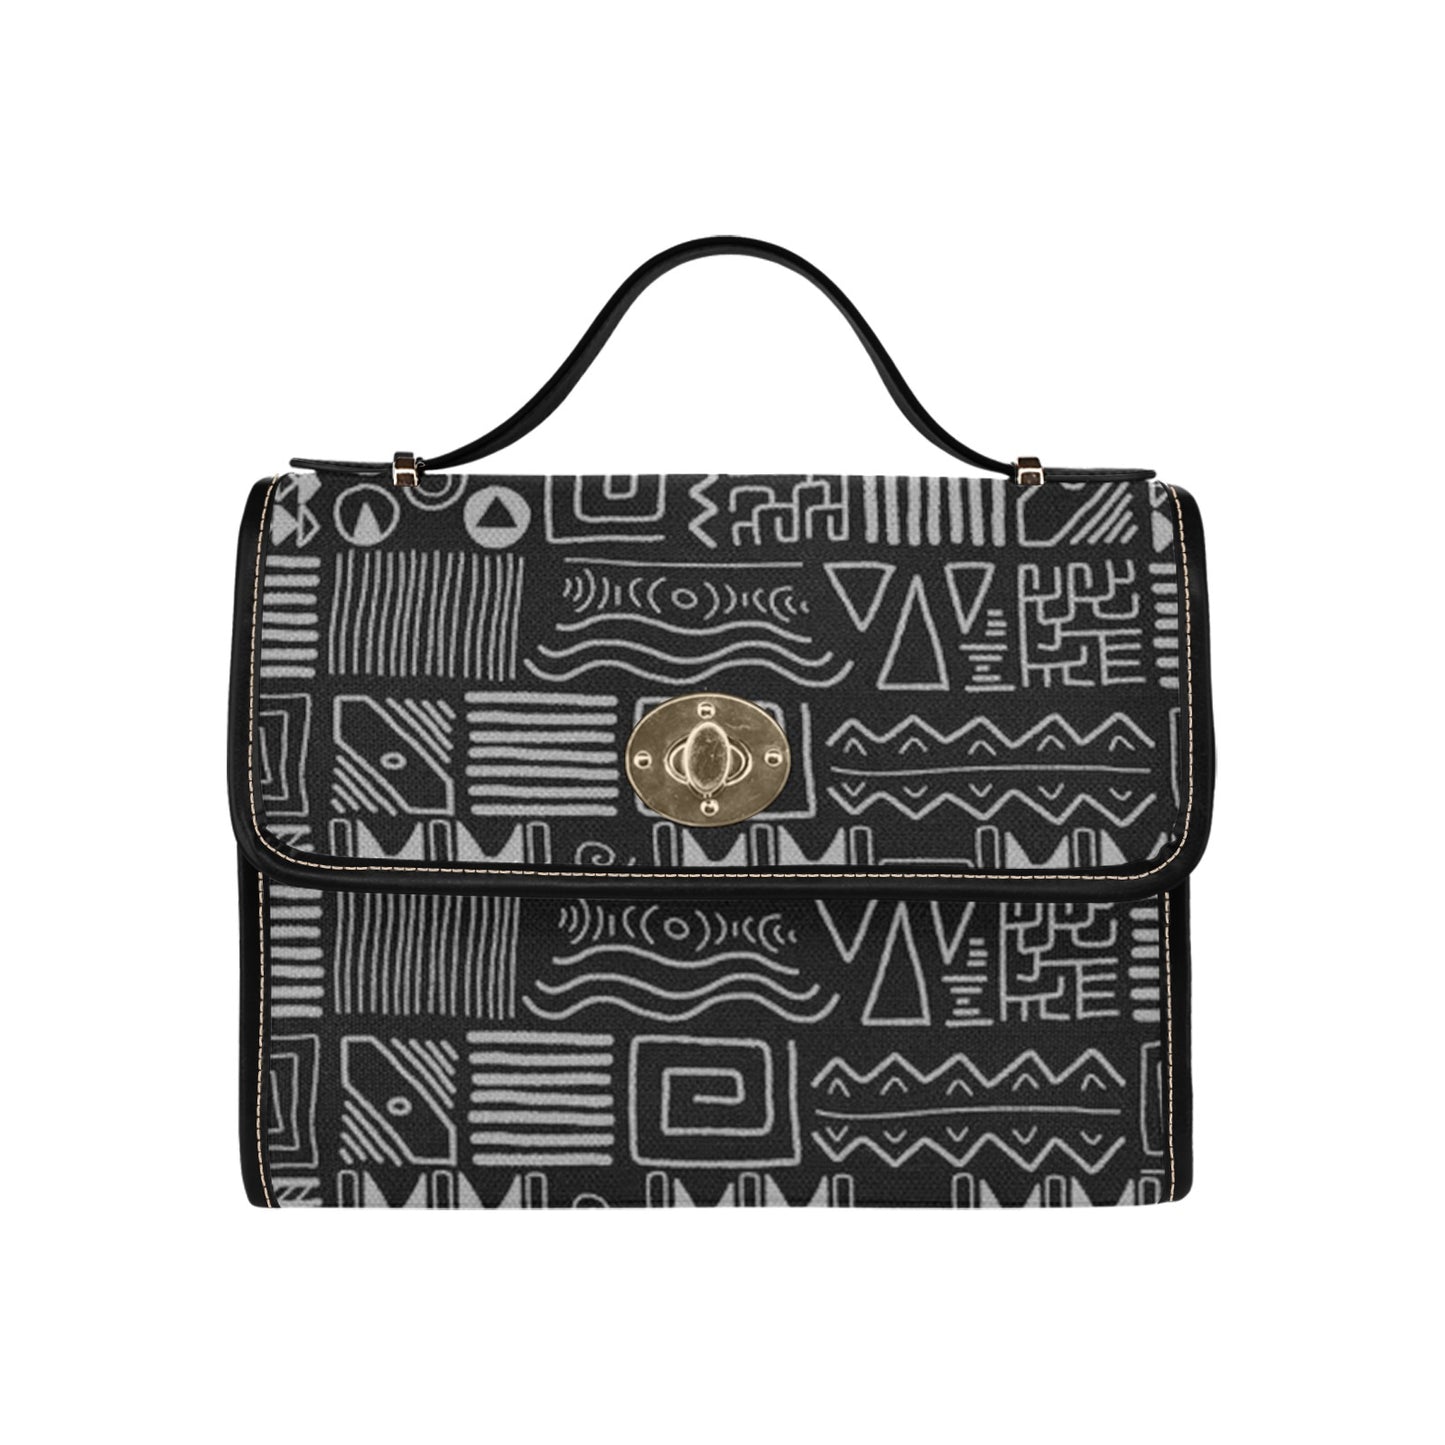 fz multi-designed handbag one size / fz egypt handbag all over print canvas bag (model 1641)(black)